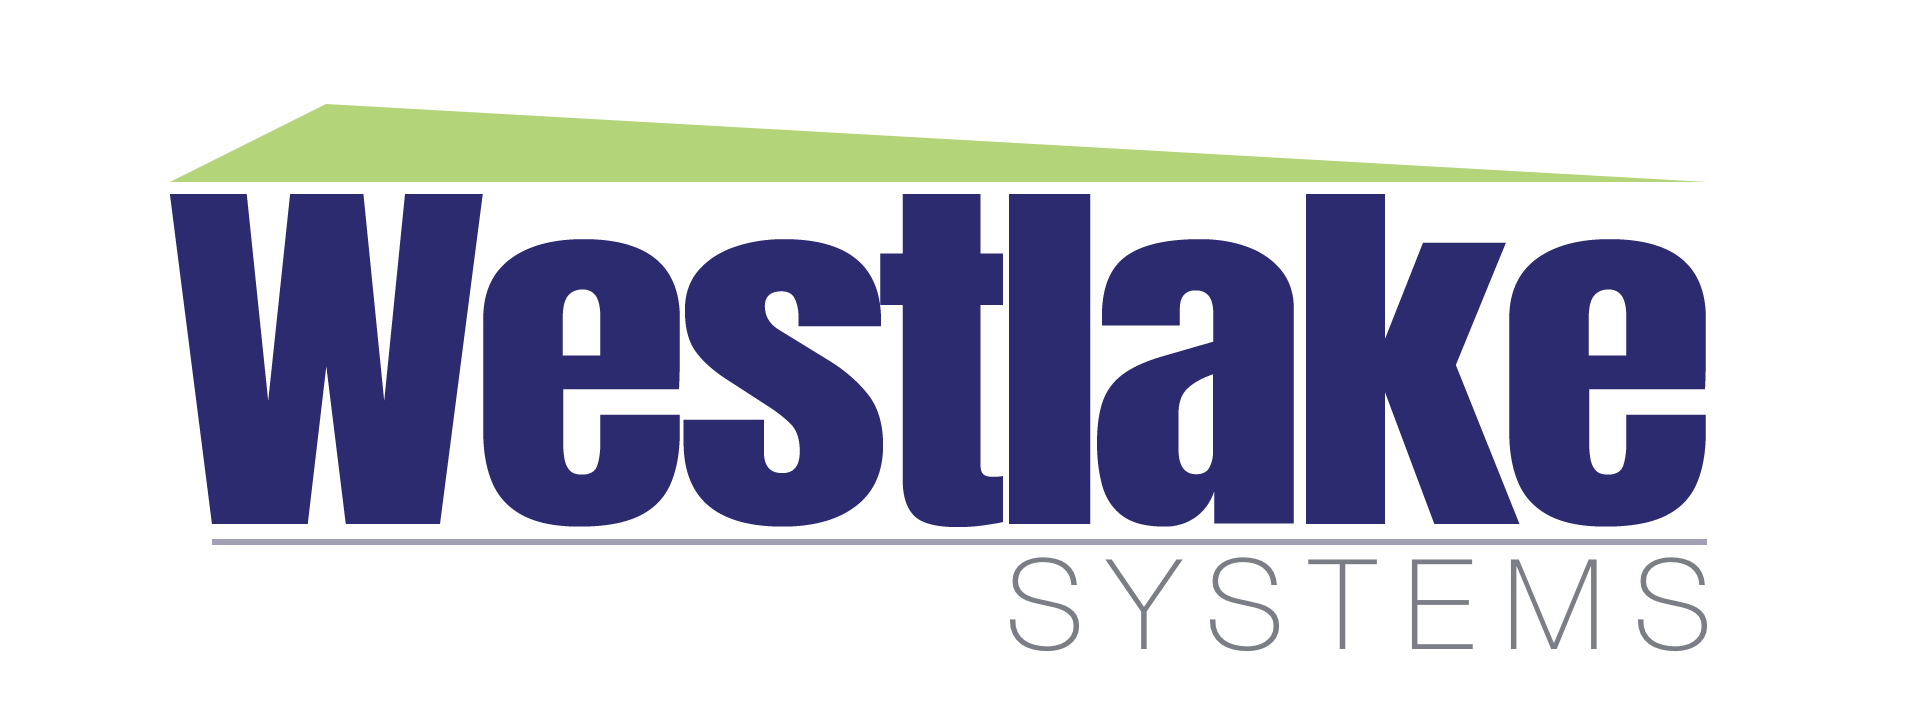 Westlake Systems FINAL